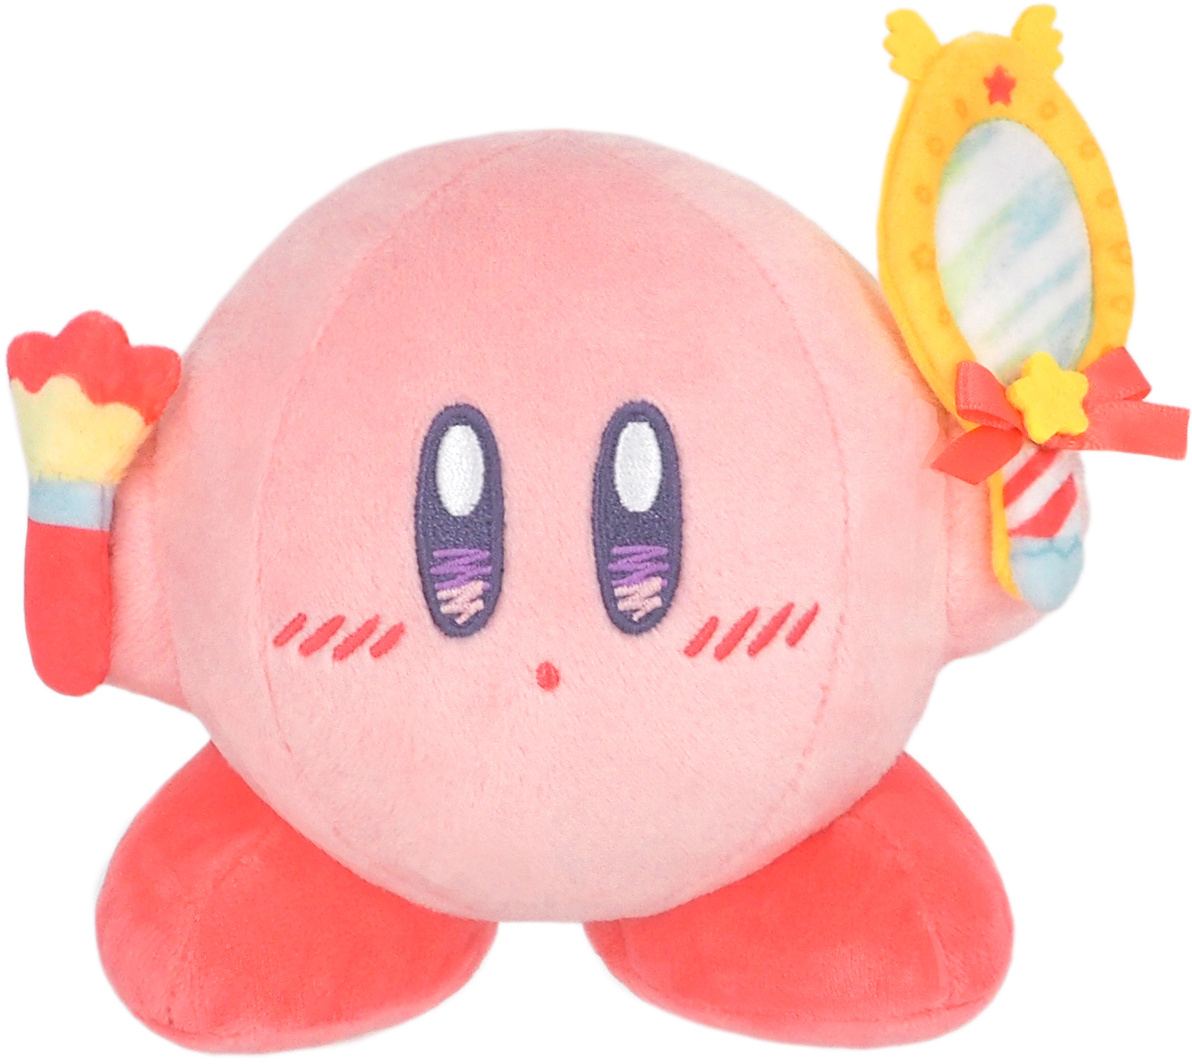 Kirby Happy Morning KHM-01 Makeup Play: Kirby Plush San-ei Boeki